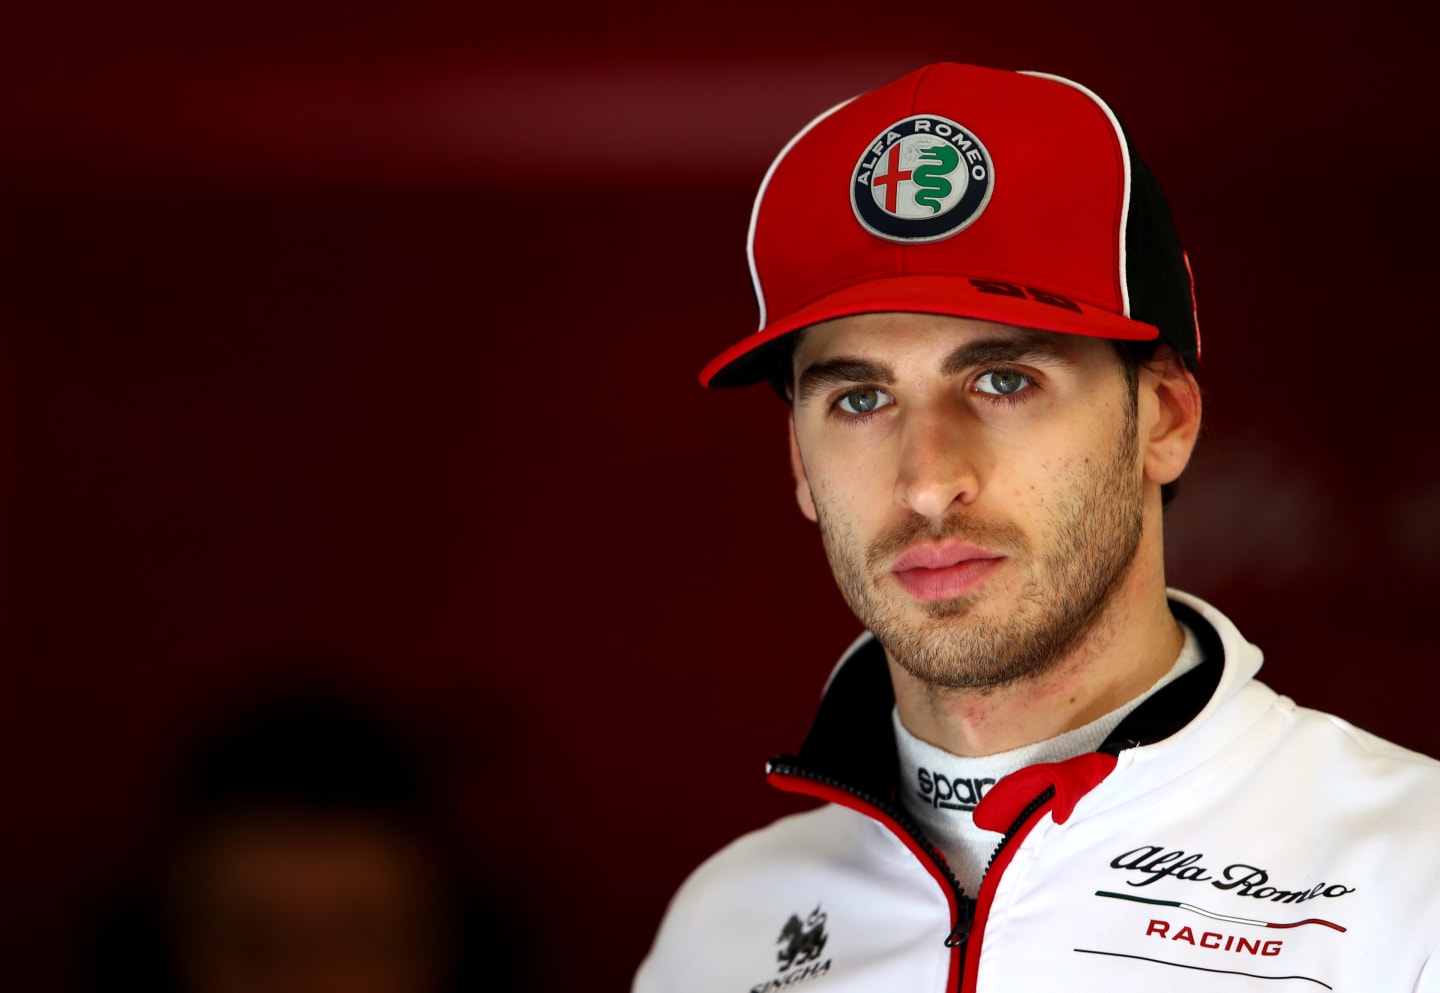 BARCELONA, SPAIN - FEBRUARY 27: Antonio Giovinazzi of Italy and Alfa Romeo Racing looks on in the